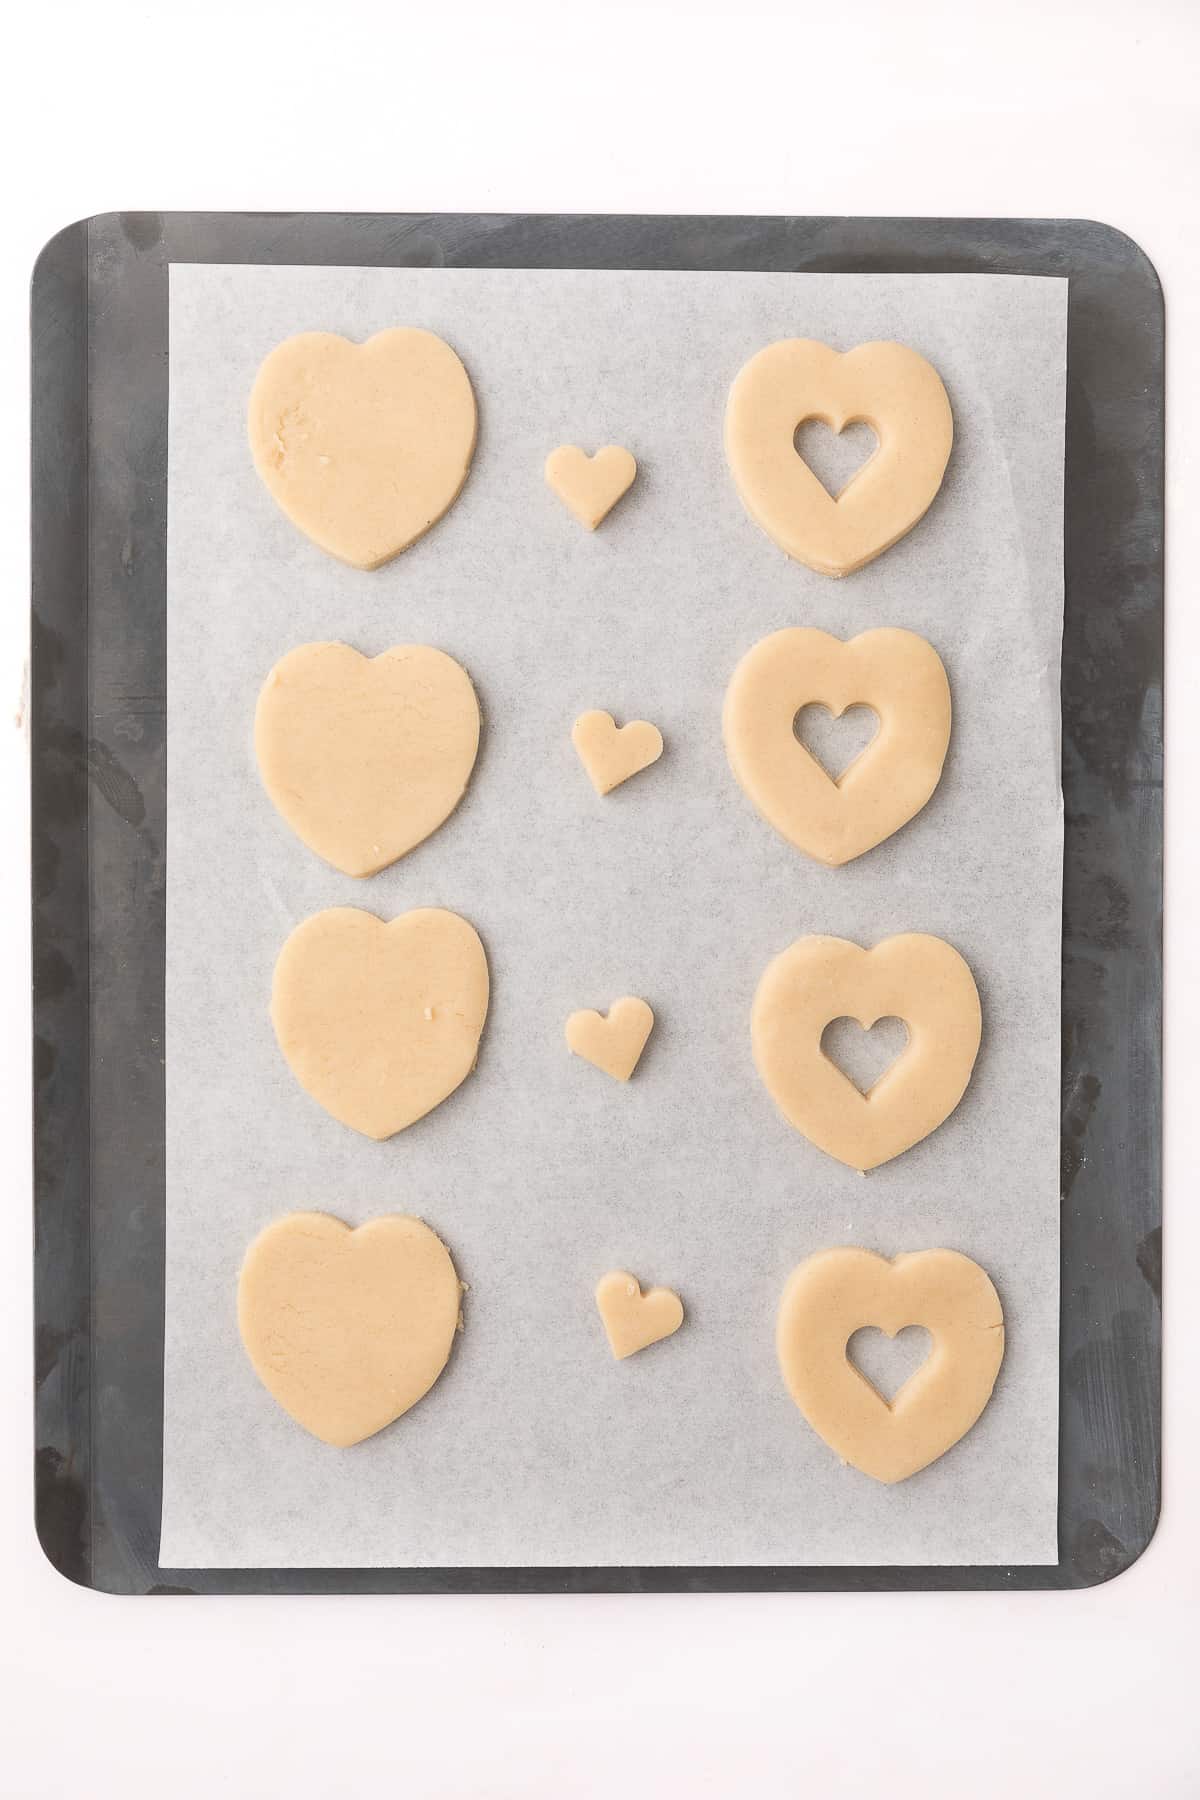 Heart shaped cutout cookies.